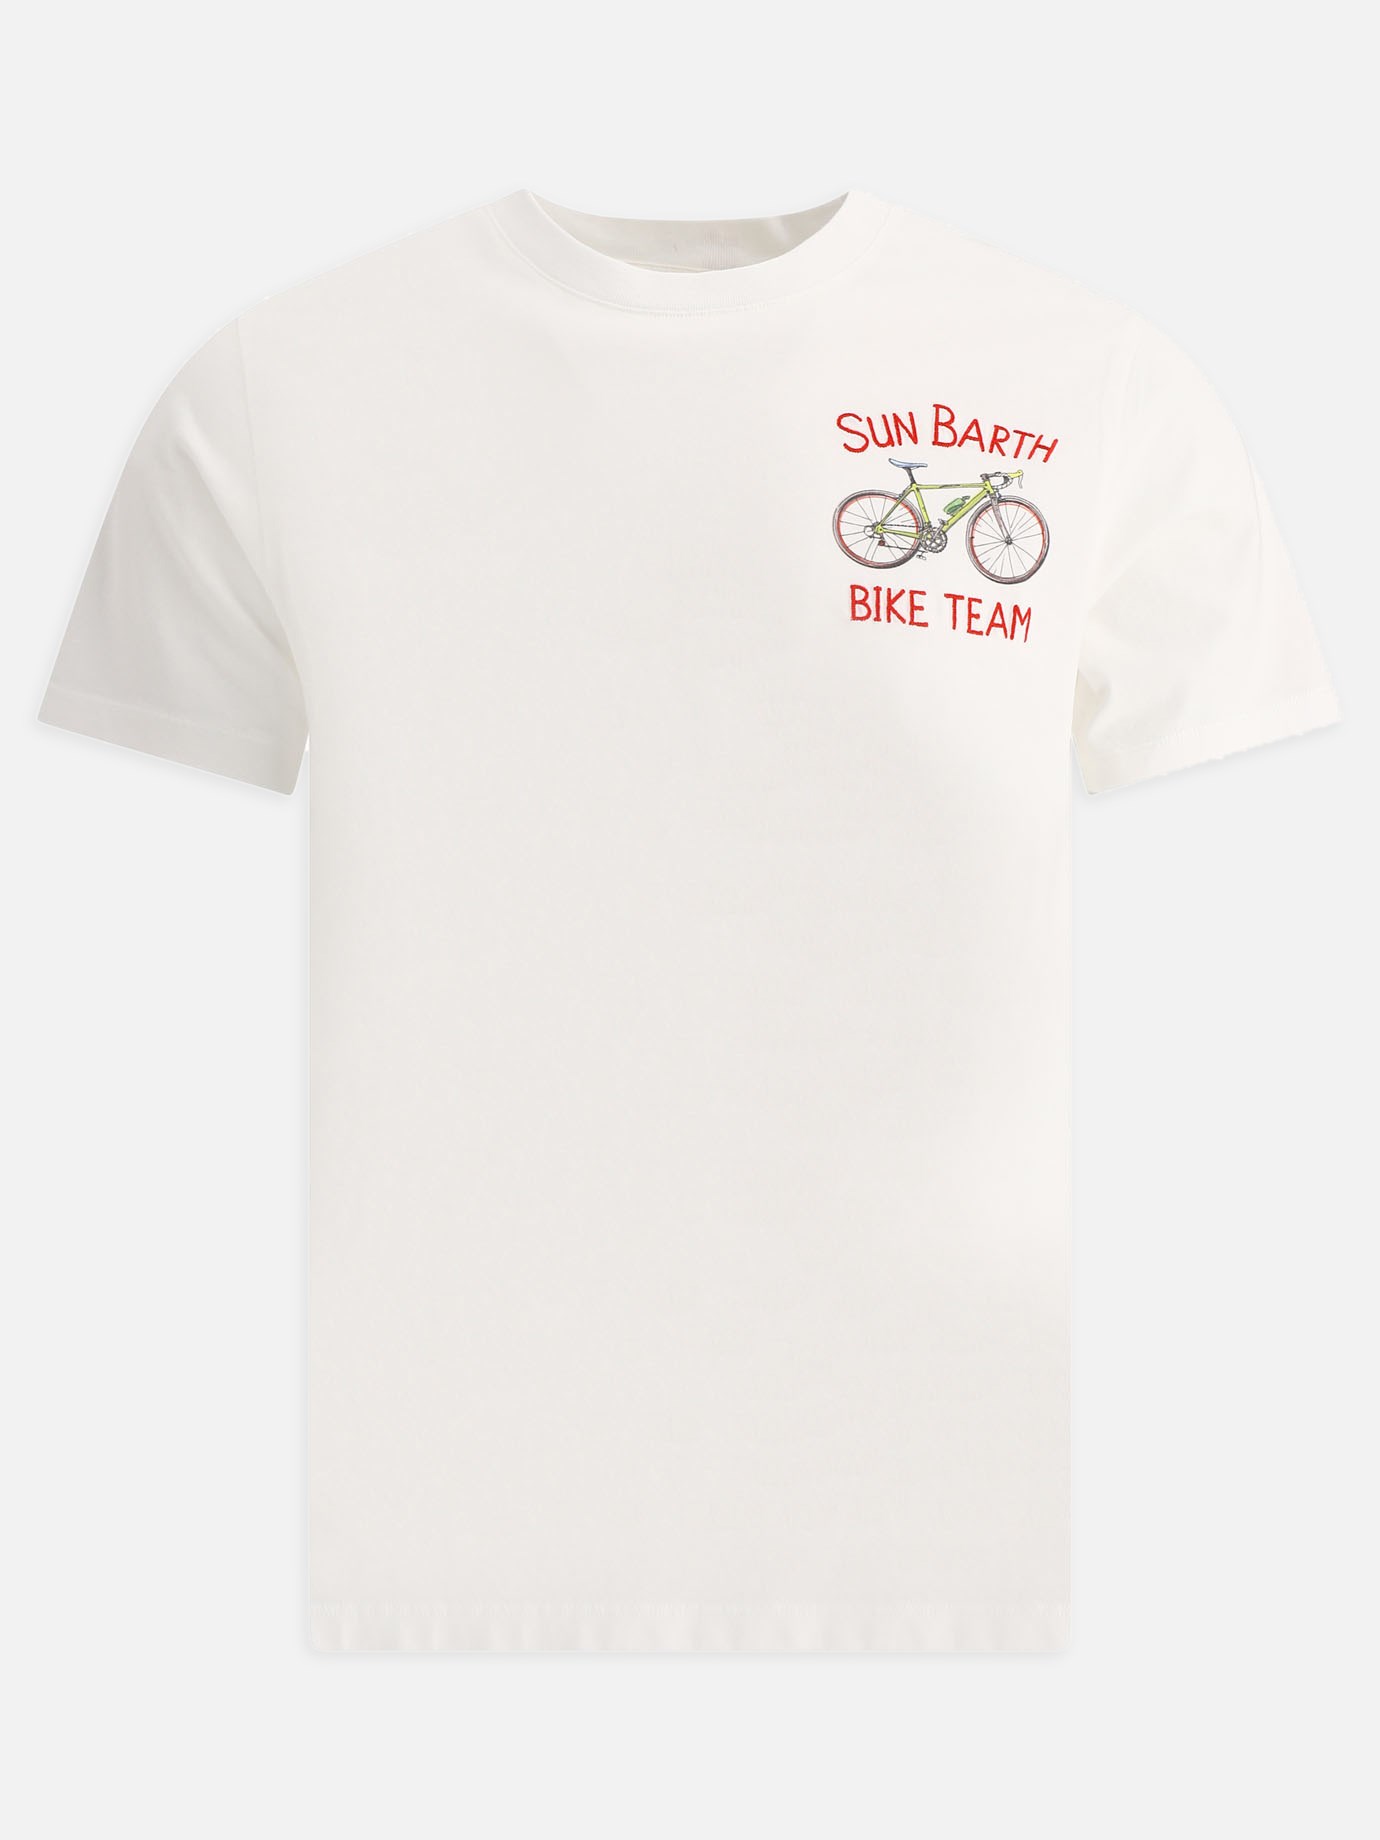  Bike Team  t-shirtby MC2 Saint Barth - 2